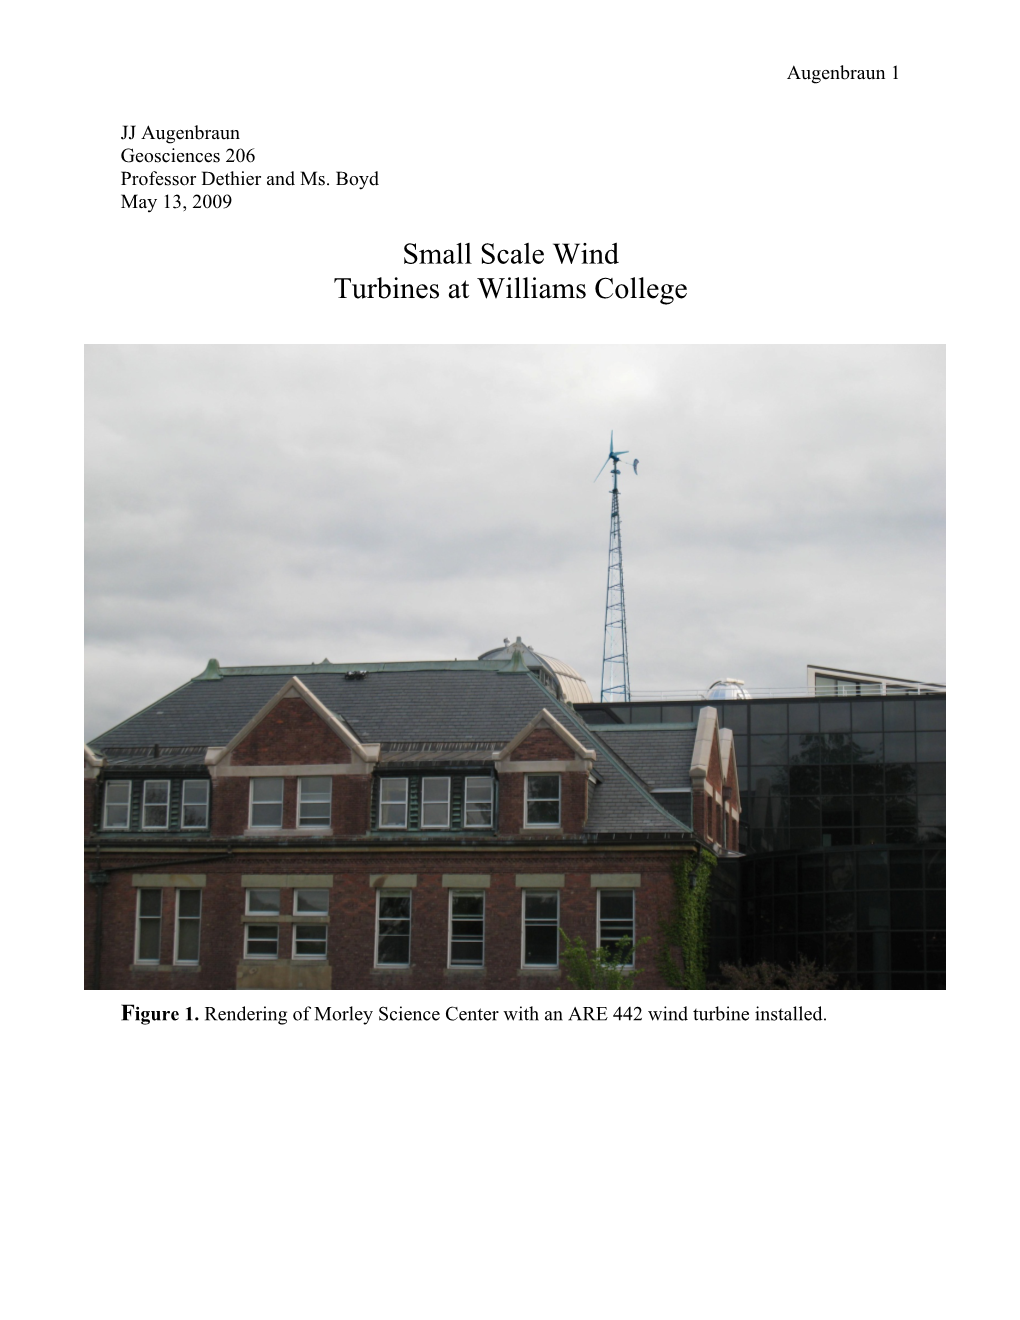 Small Scale Wind Turbines at Williams College